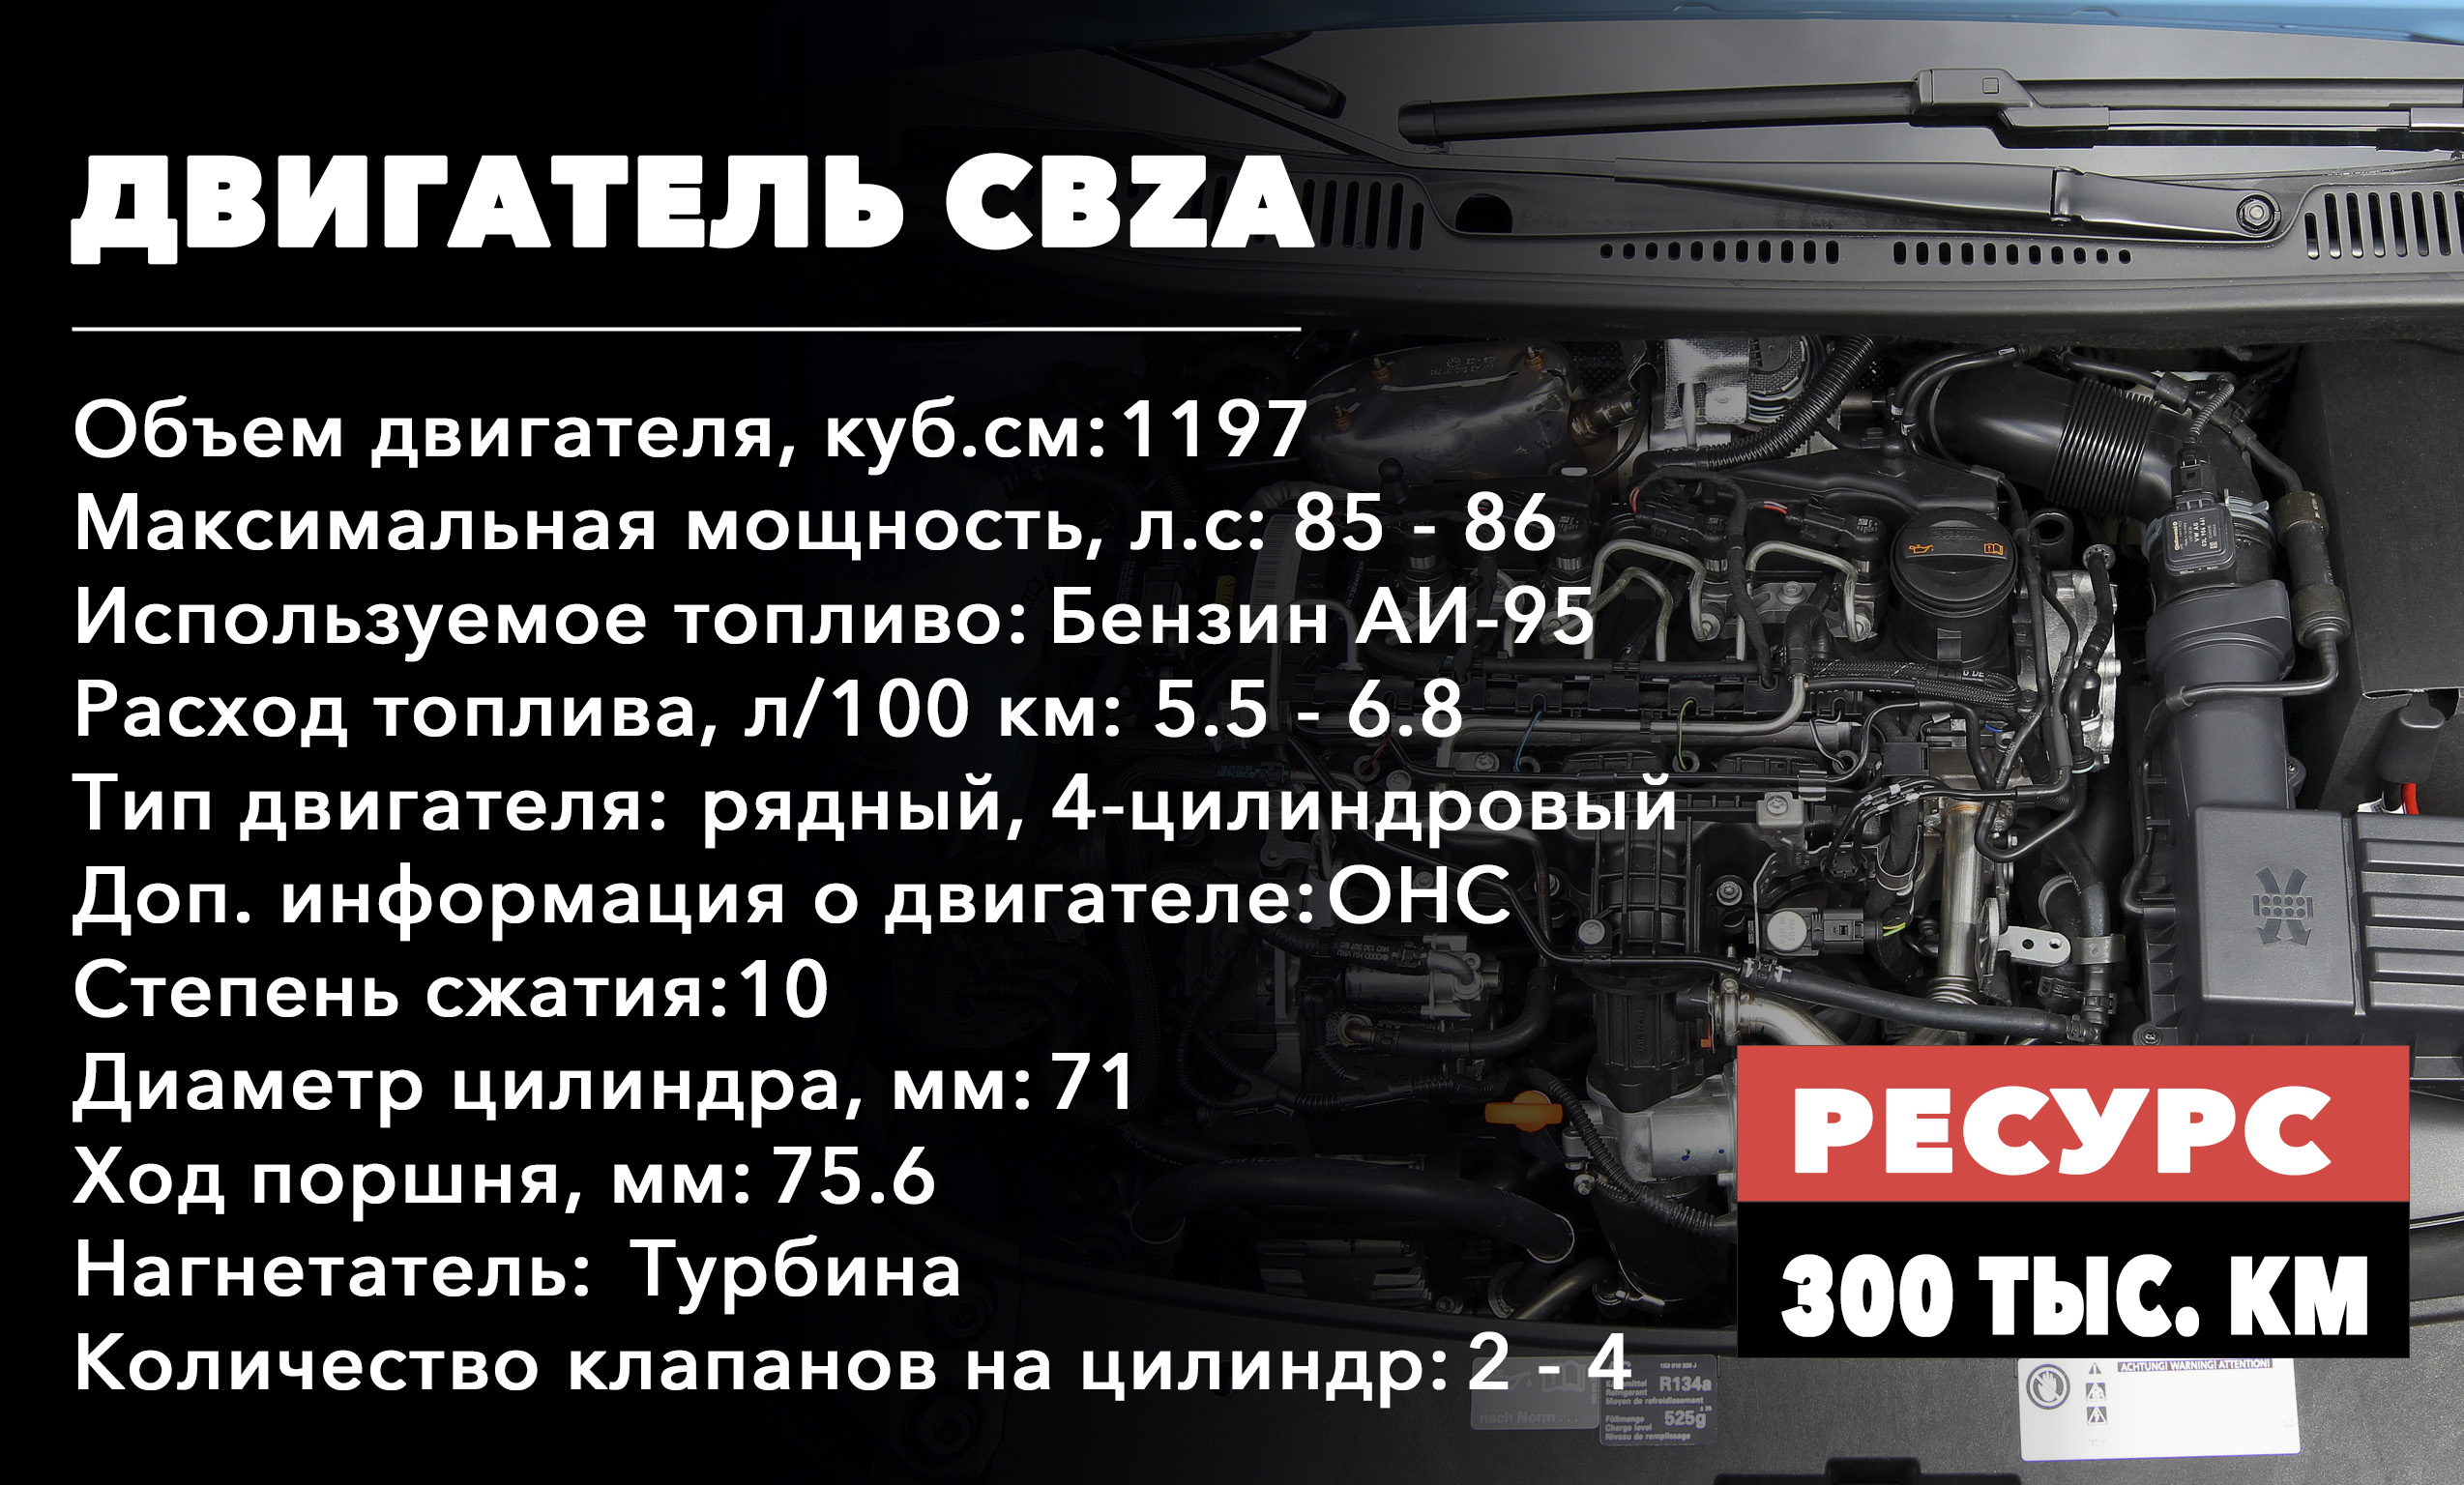 Ресурс моторов на 1.2 литра(CBZA)